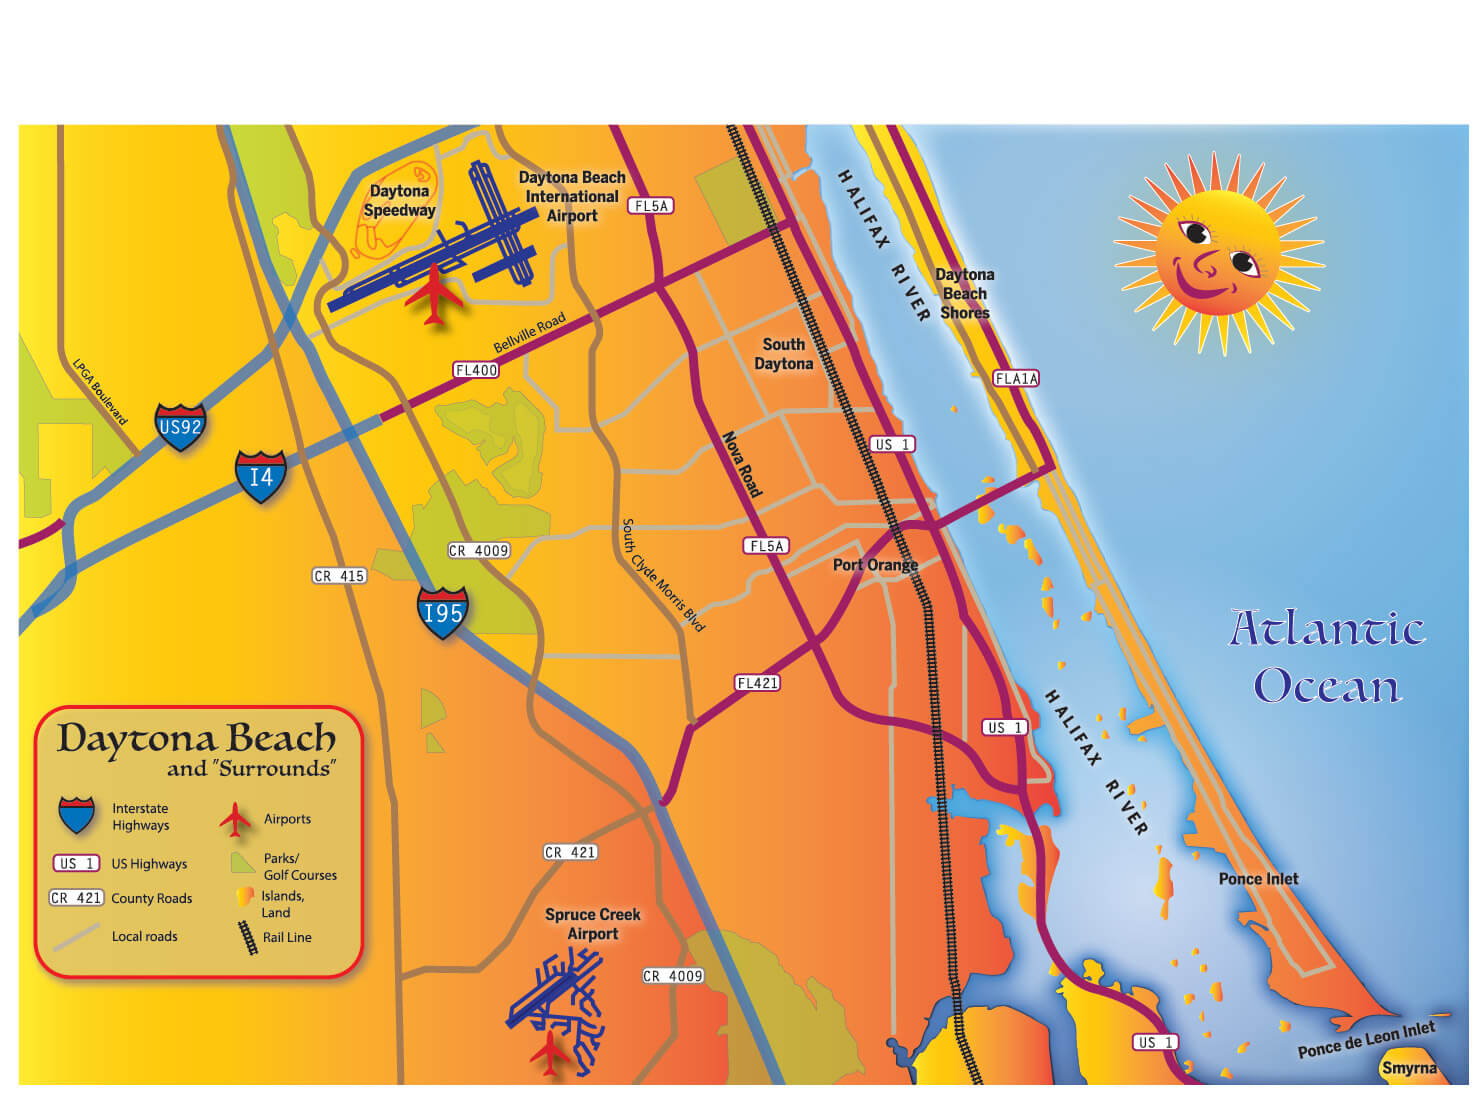 traced art map of Port Orange Florida